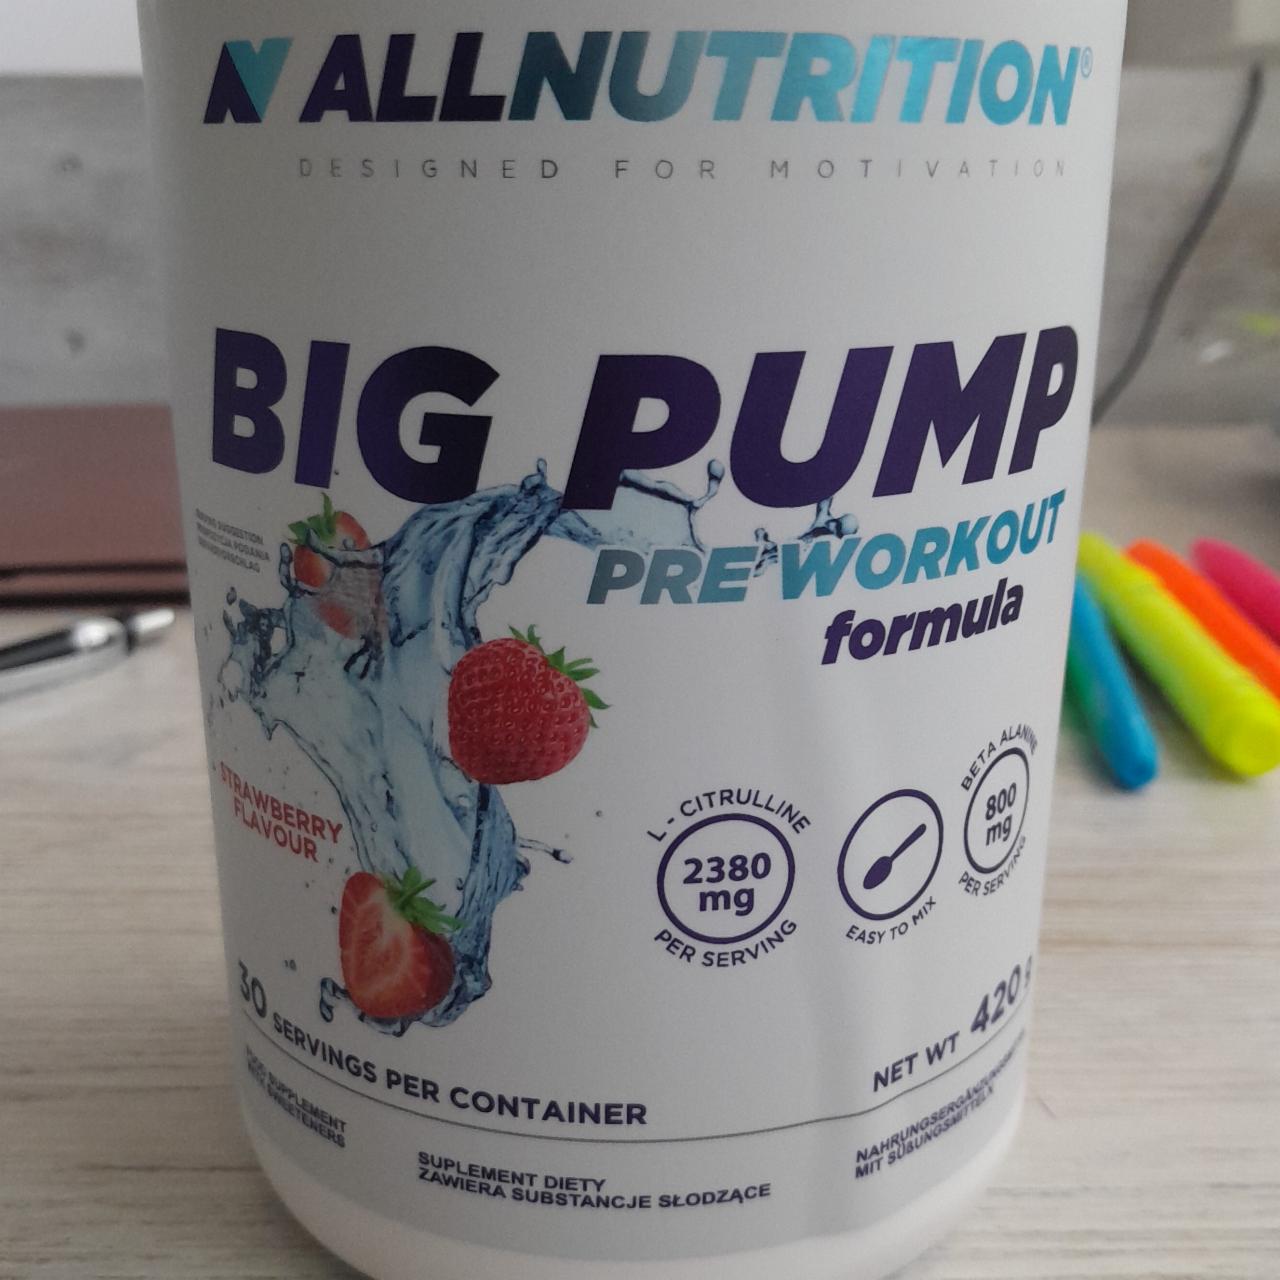 Fotografie - Big pump preworkout formula strawberry flavour Allnutrition